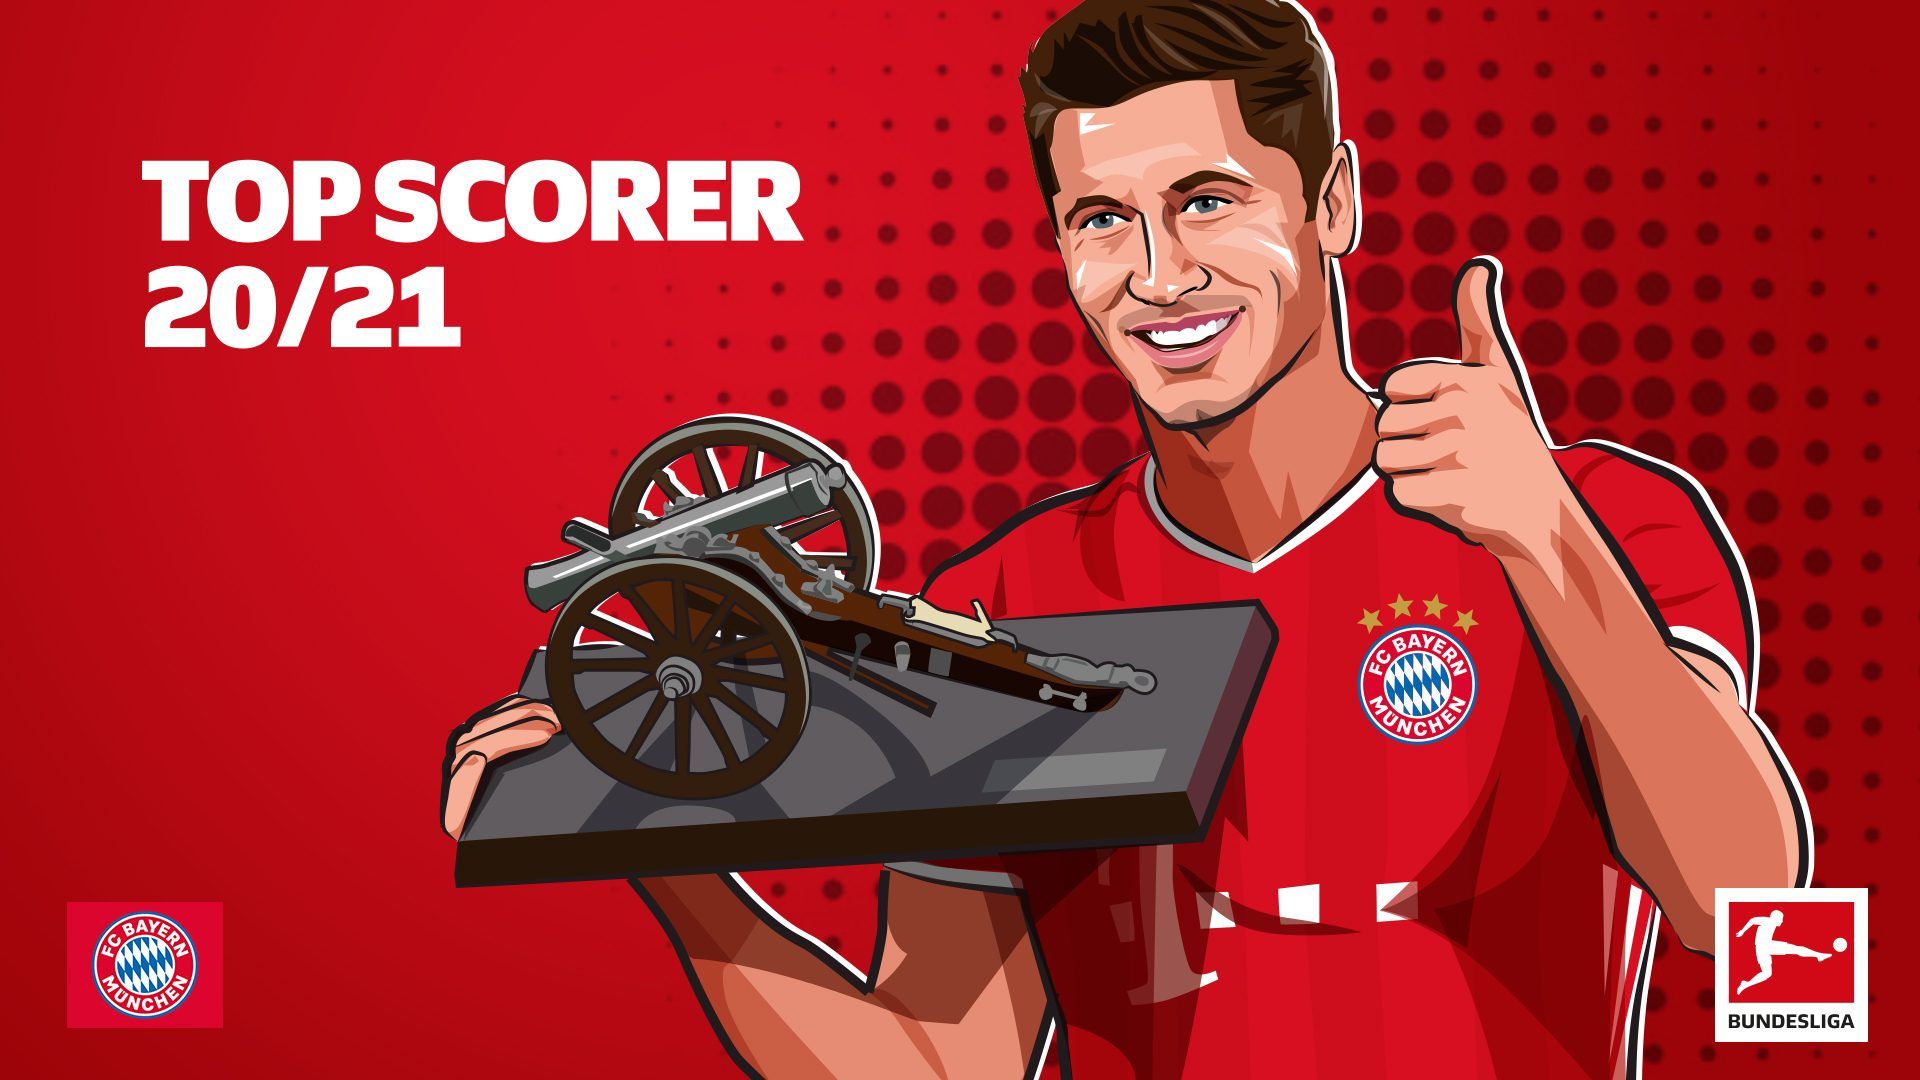 Bundesliga. Robert Lewandowski, Erling Haaland, Andrej Kramaric and the race to become the Bundesliga's top scorer